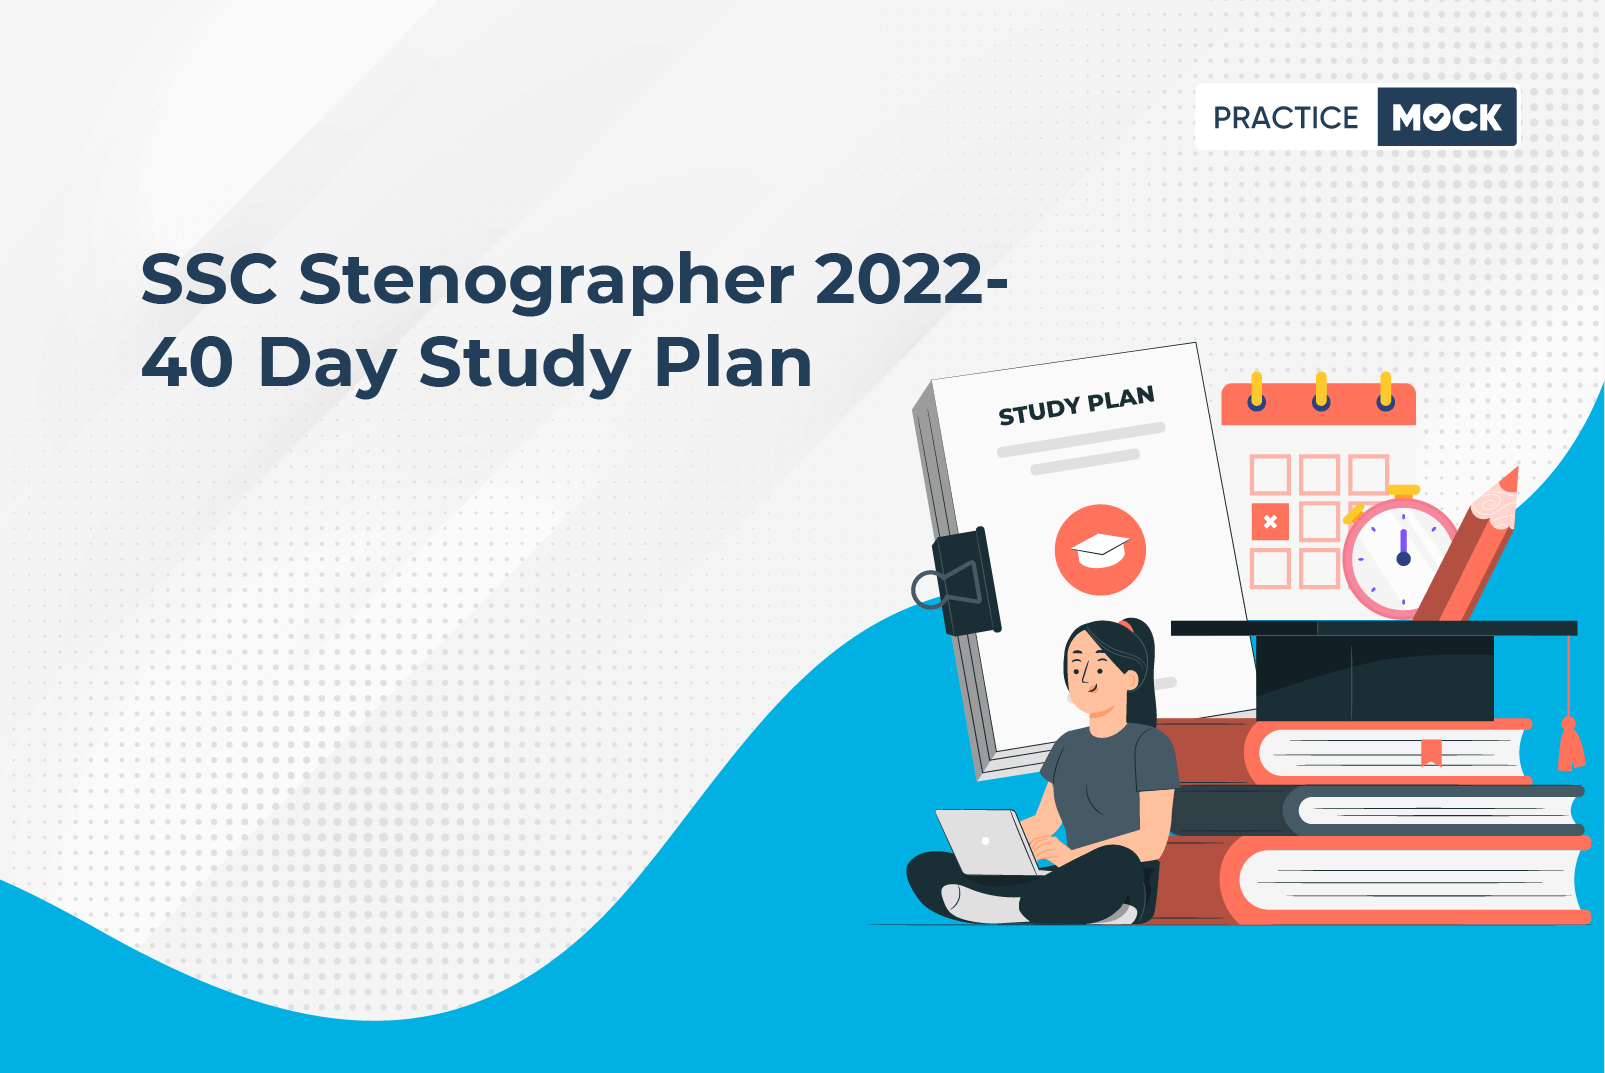 SSC Stenographer 2022-40 Day Study Plan